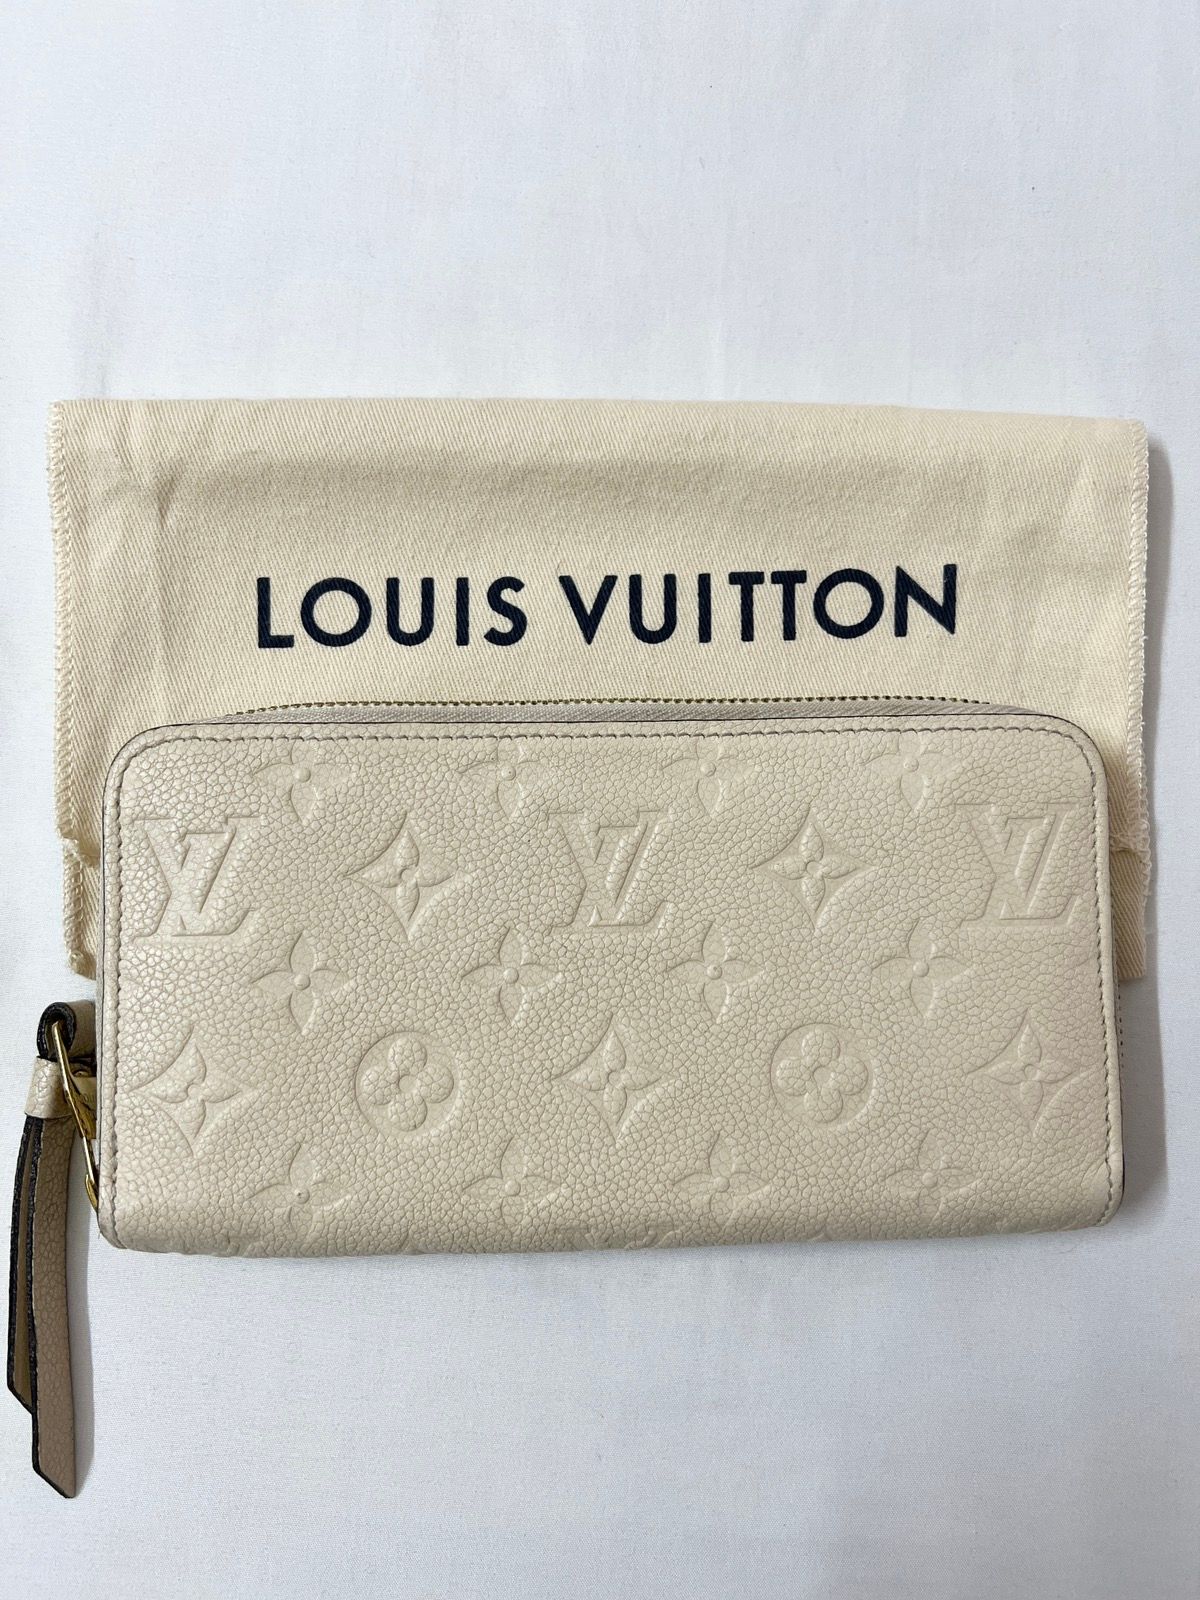 Louis Vuitton Cherry Monogram Empreinte Leather Curieuse Wallet at